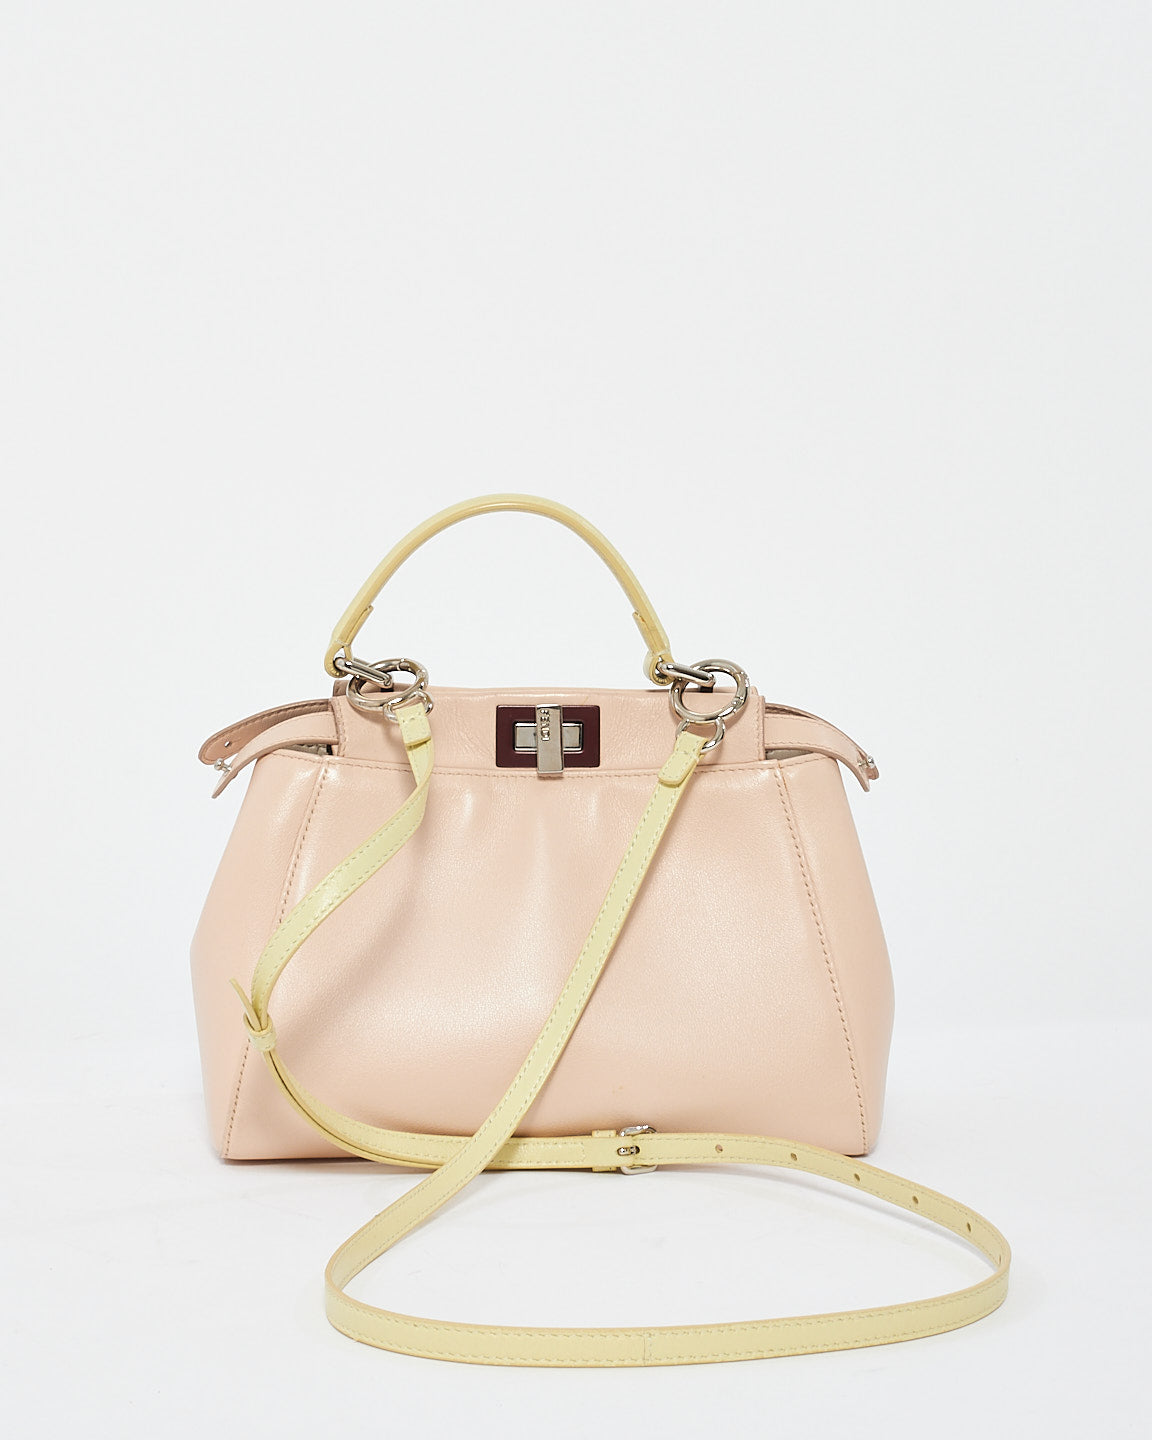 Fendi Light Pink Leather Mini Peekaboo Bag